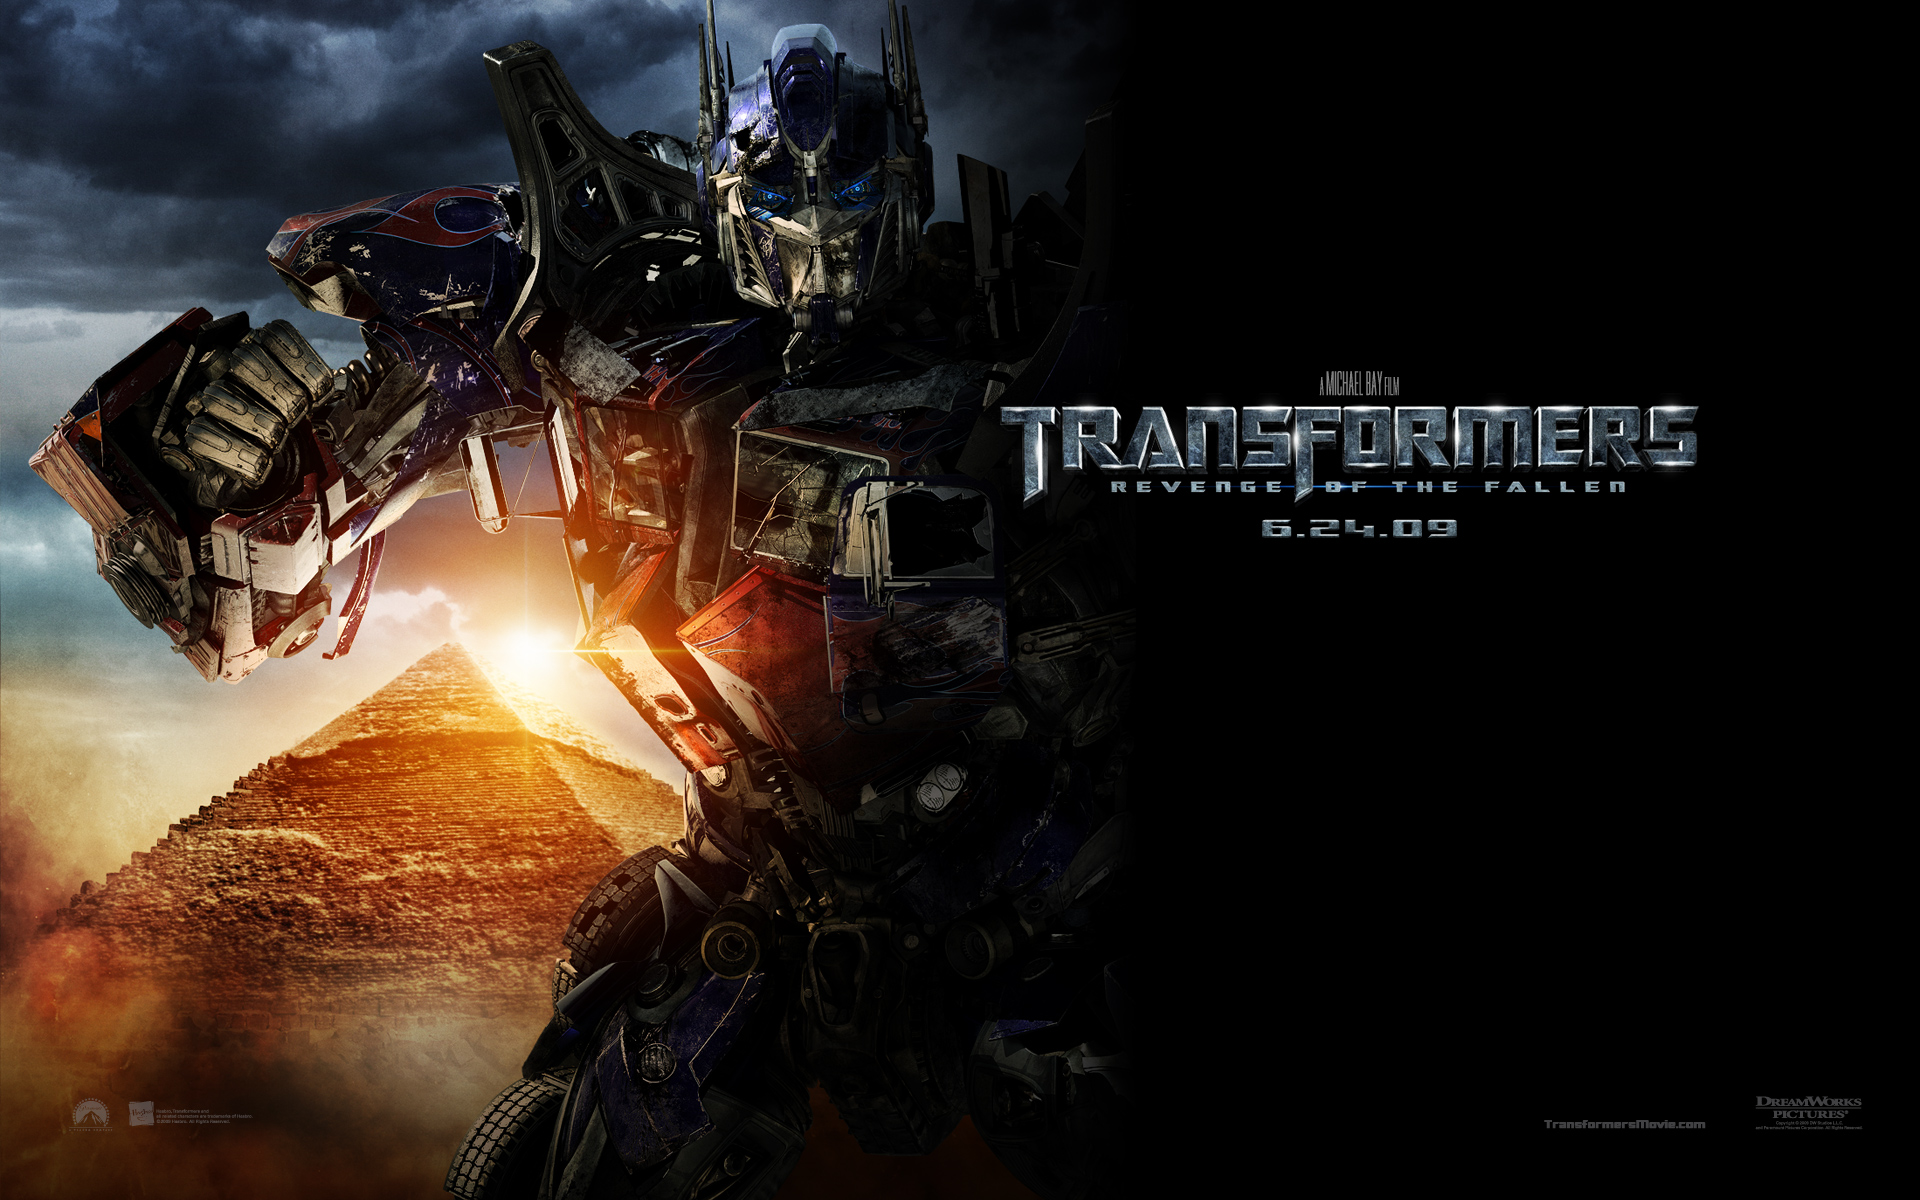 Transformers Transformers Wallpaper